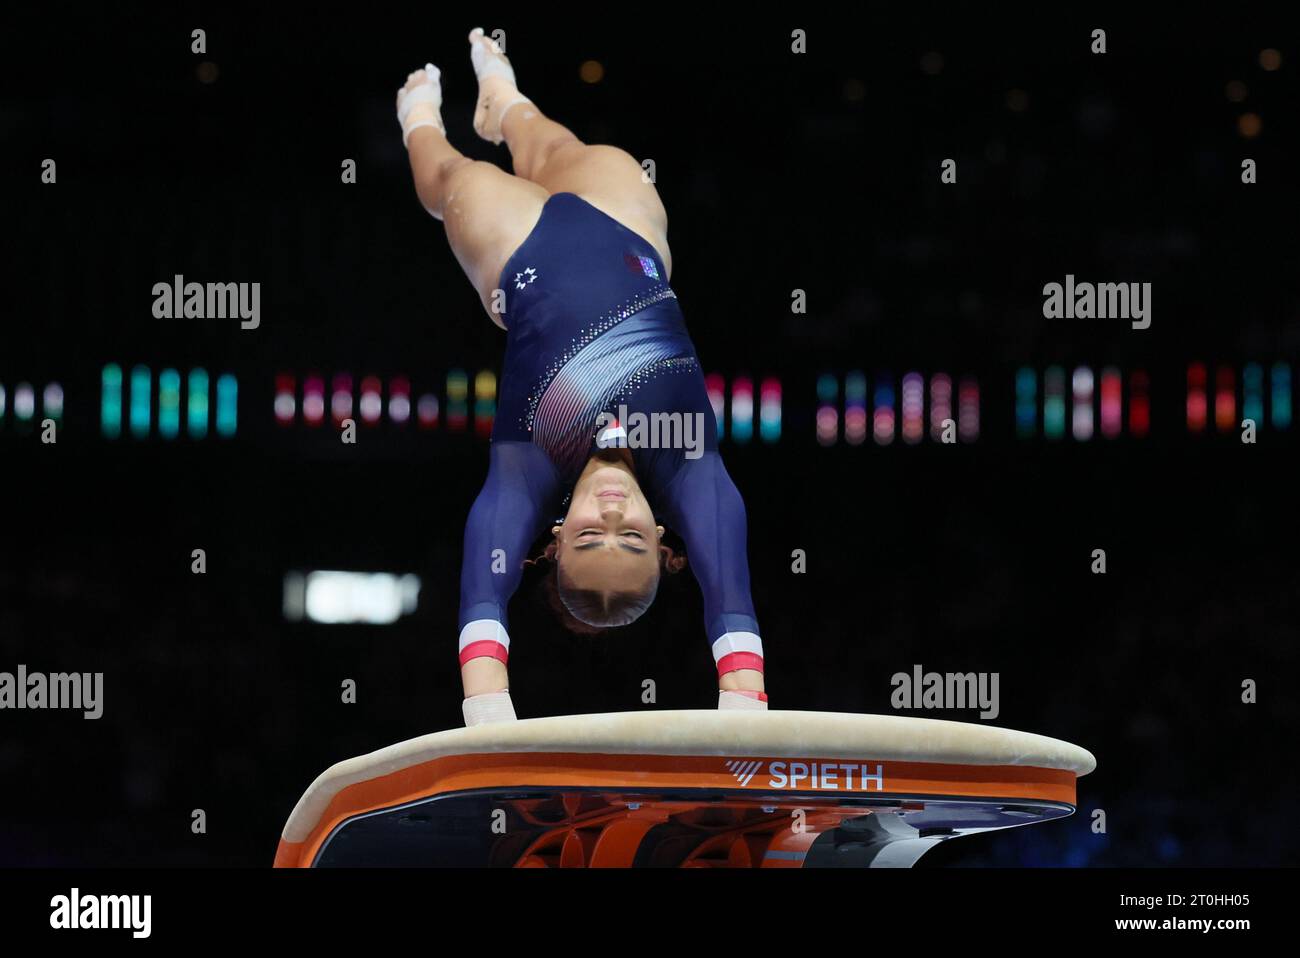 Artistic Gymnastics World Championships 2023 - Apparatus Finals